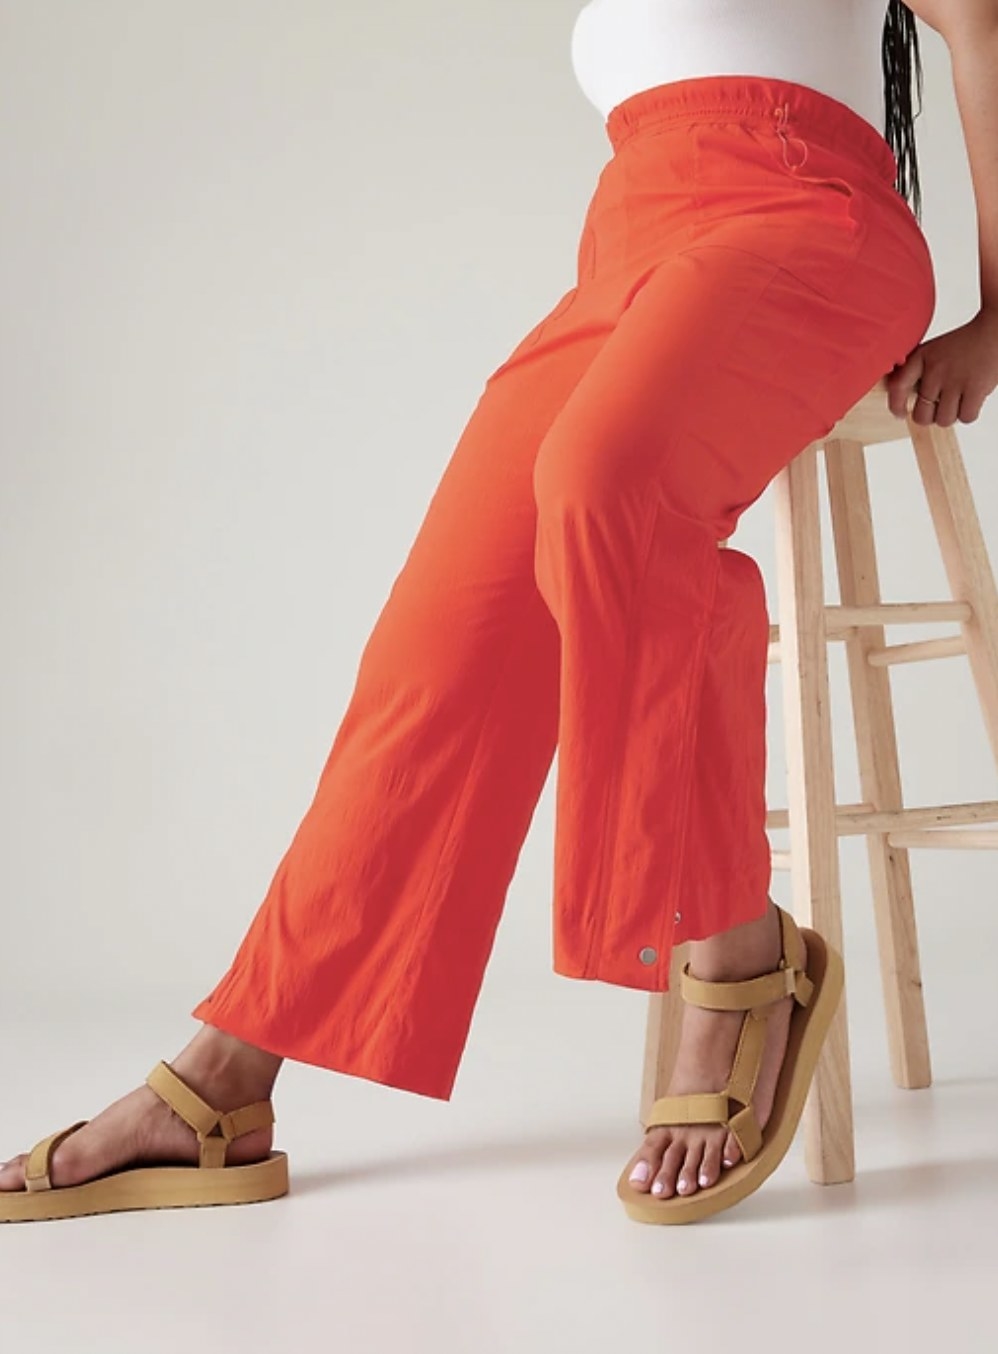 Model sitting on tall stool in orange parachute pants